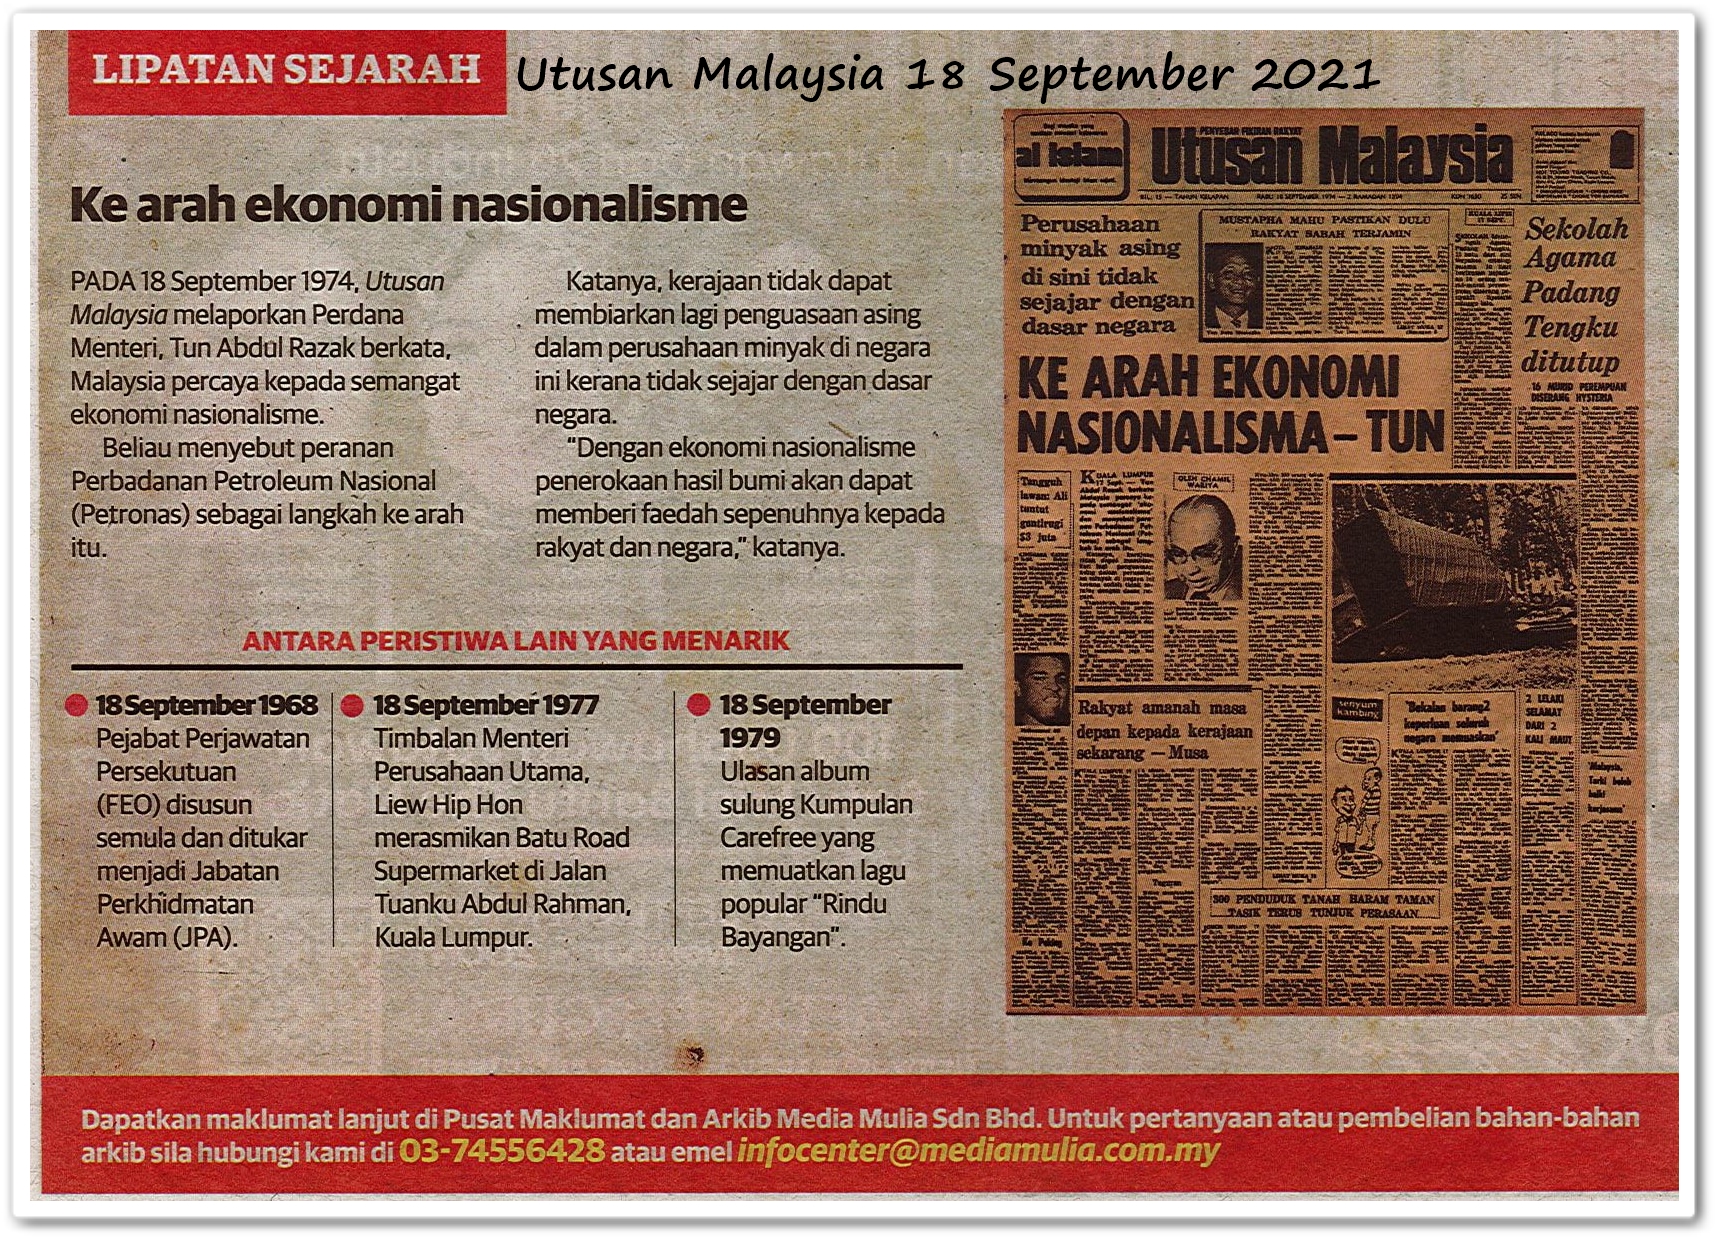 Lipatan sejarah 18 September - Keratan akhbar Utusan Malaysia 18 September 2021